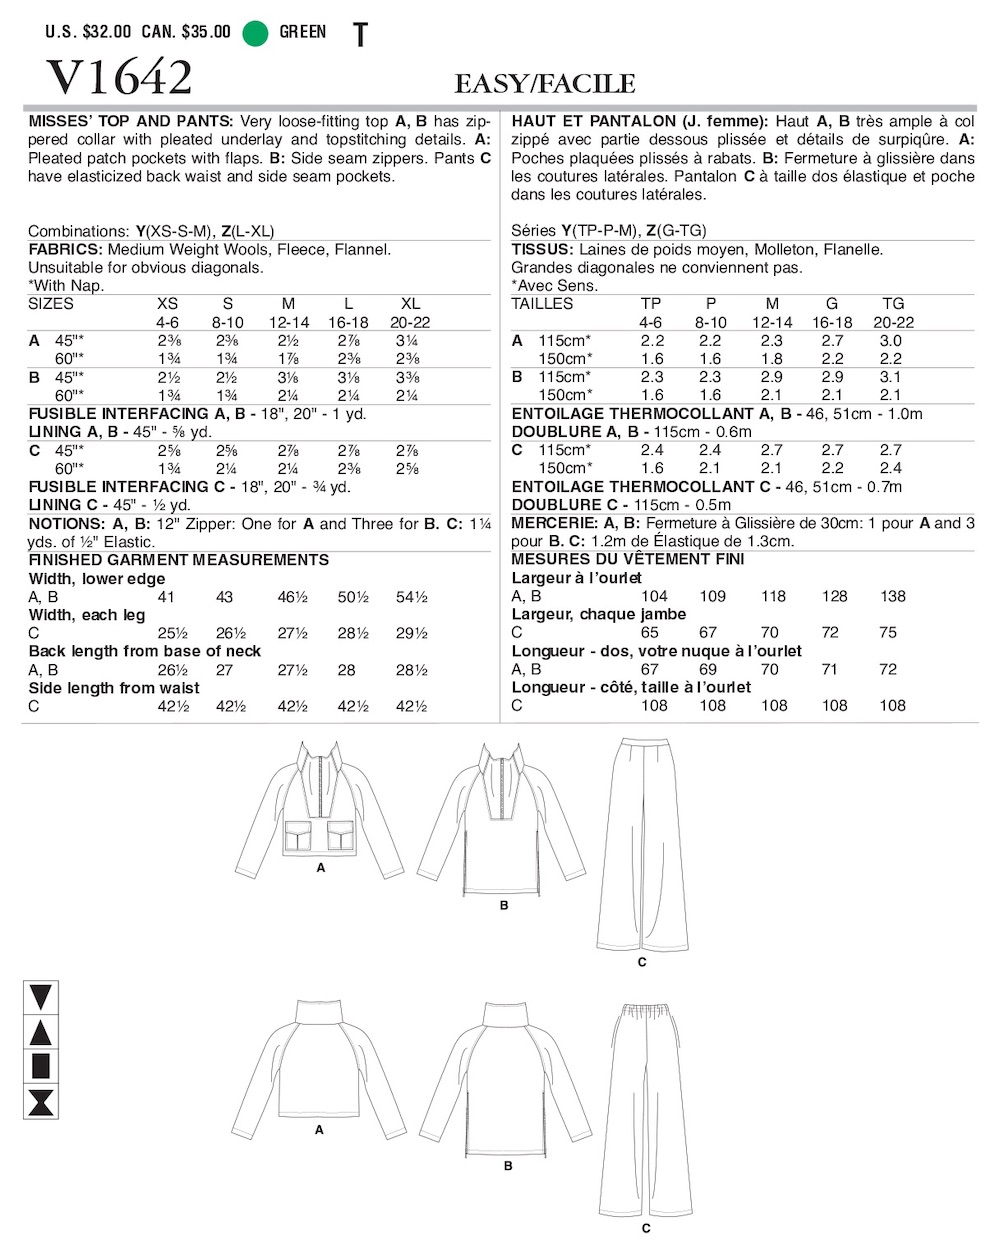 Vogue® Patterns Papierschnittmuster Pullover&Hose V1642